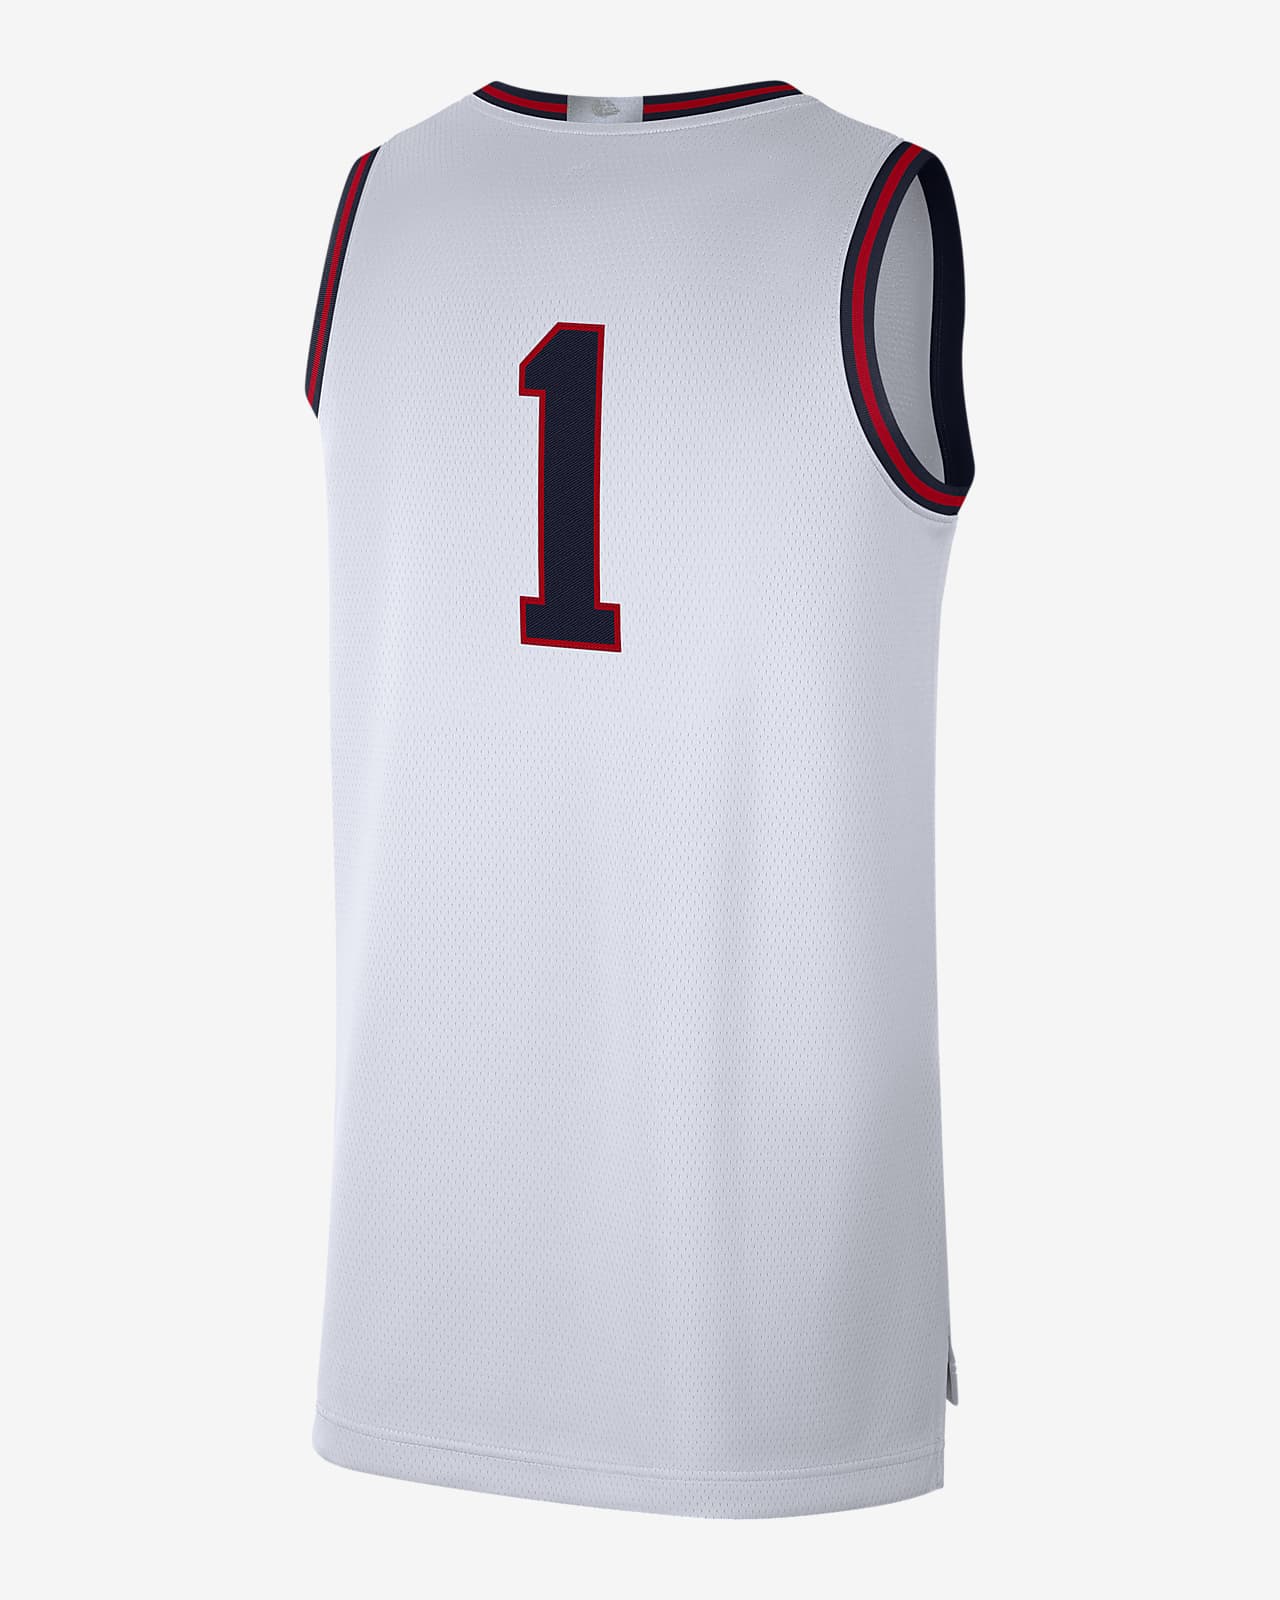 Gonzaga Limited Men's Nike Dri-FIT College Basketball Jersey.